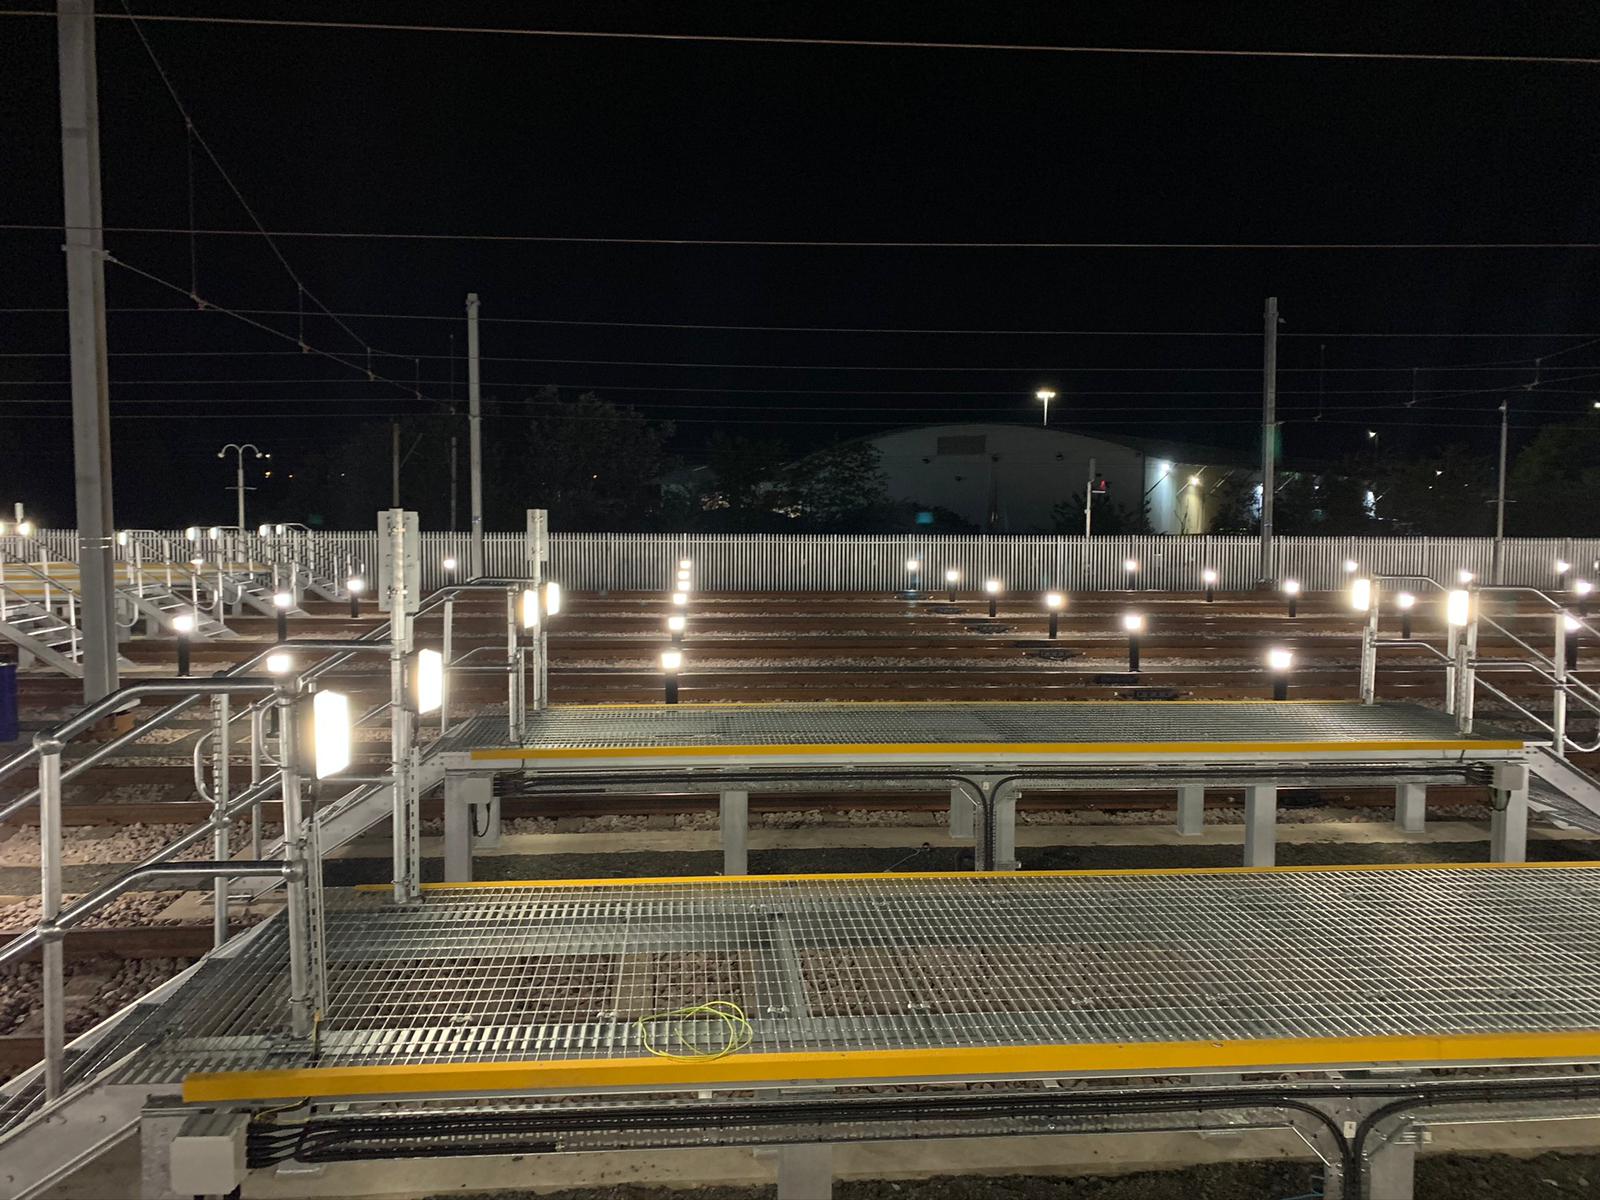 Rail depot at night